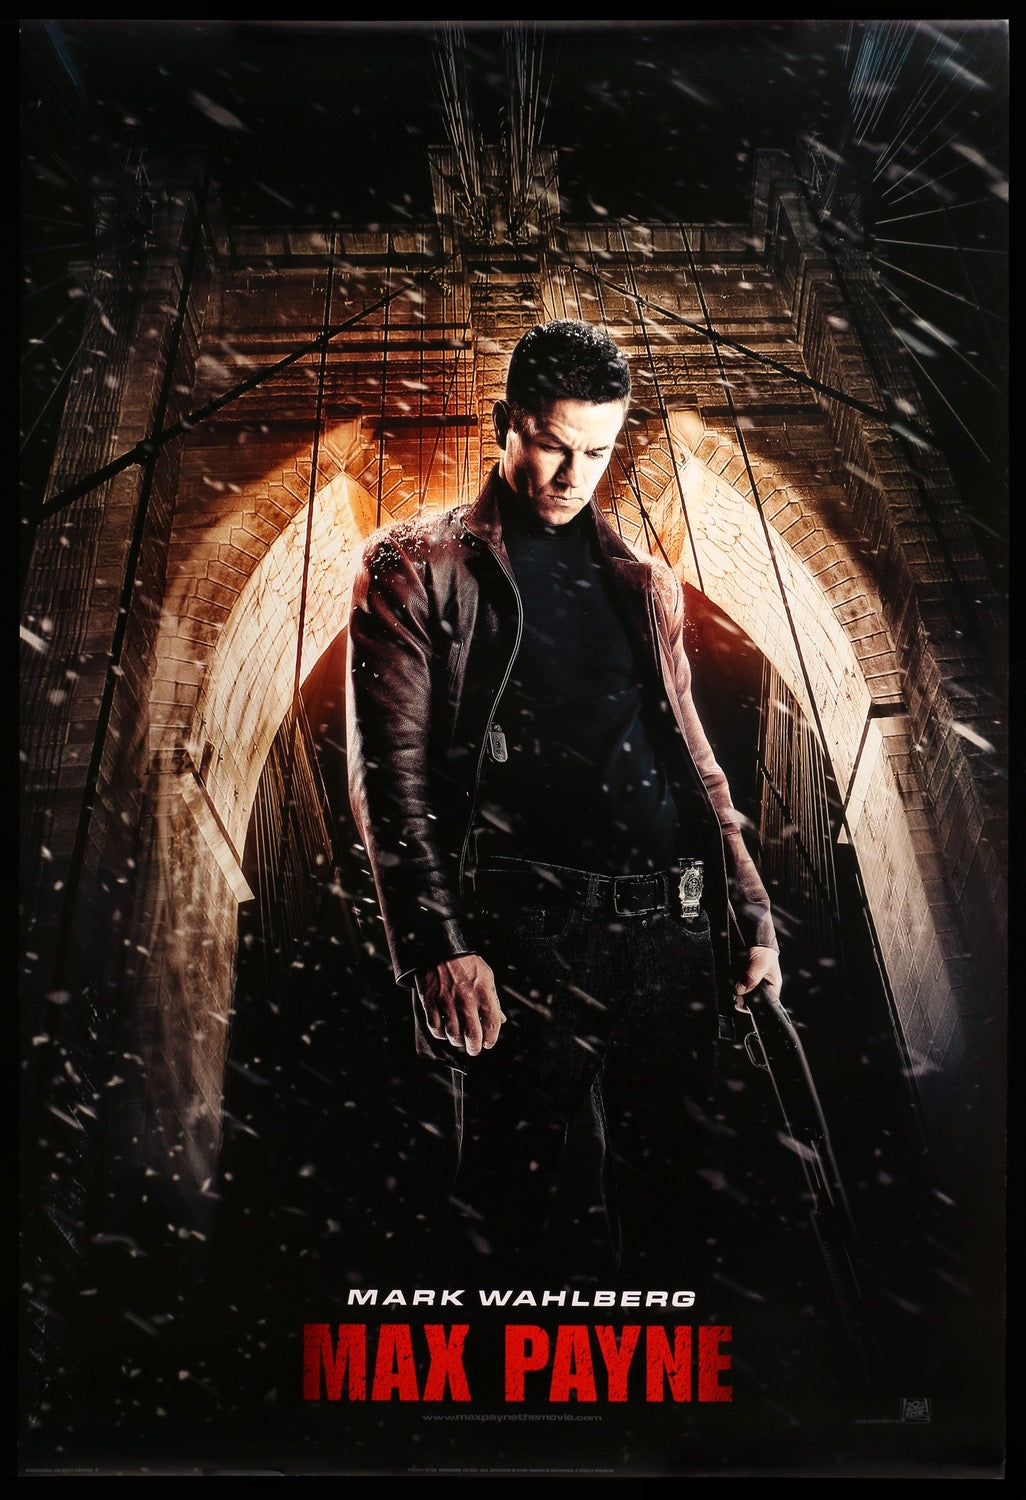 Max Payne (2008) original movie poster for sale at Original Film Art